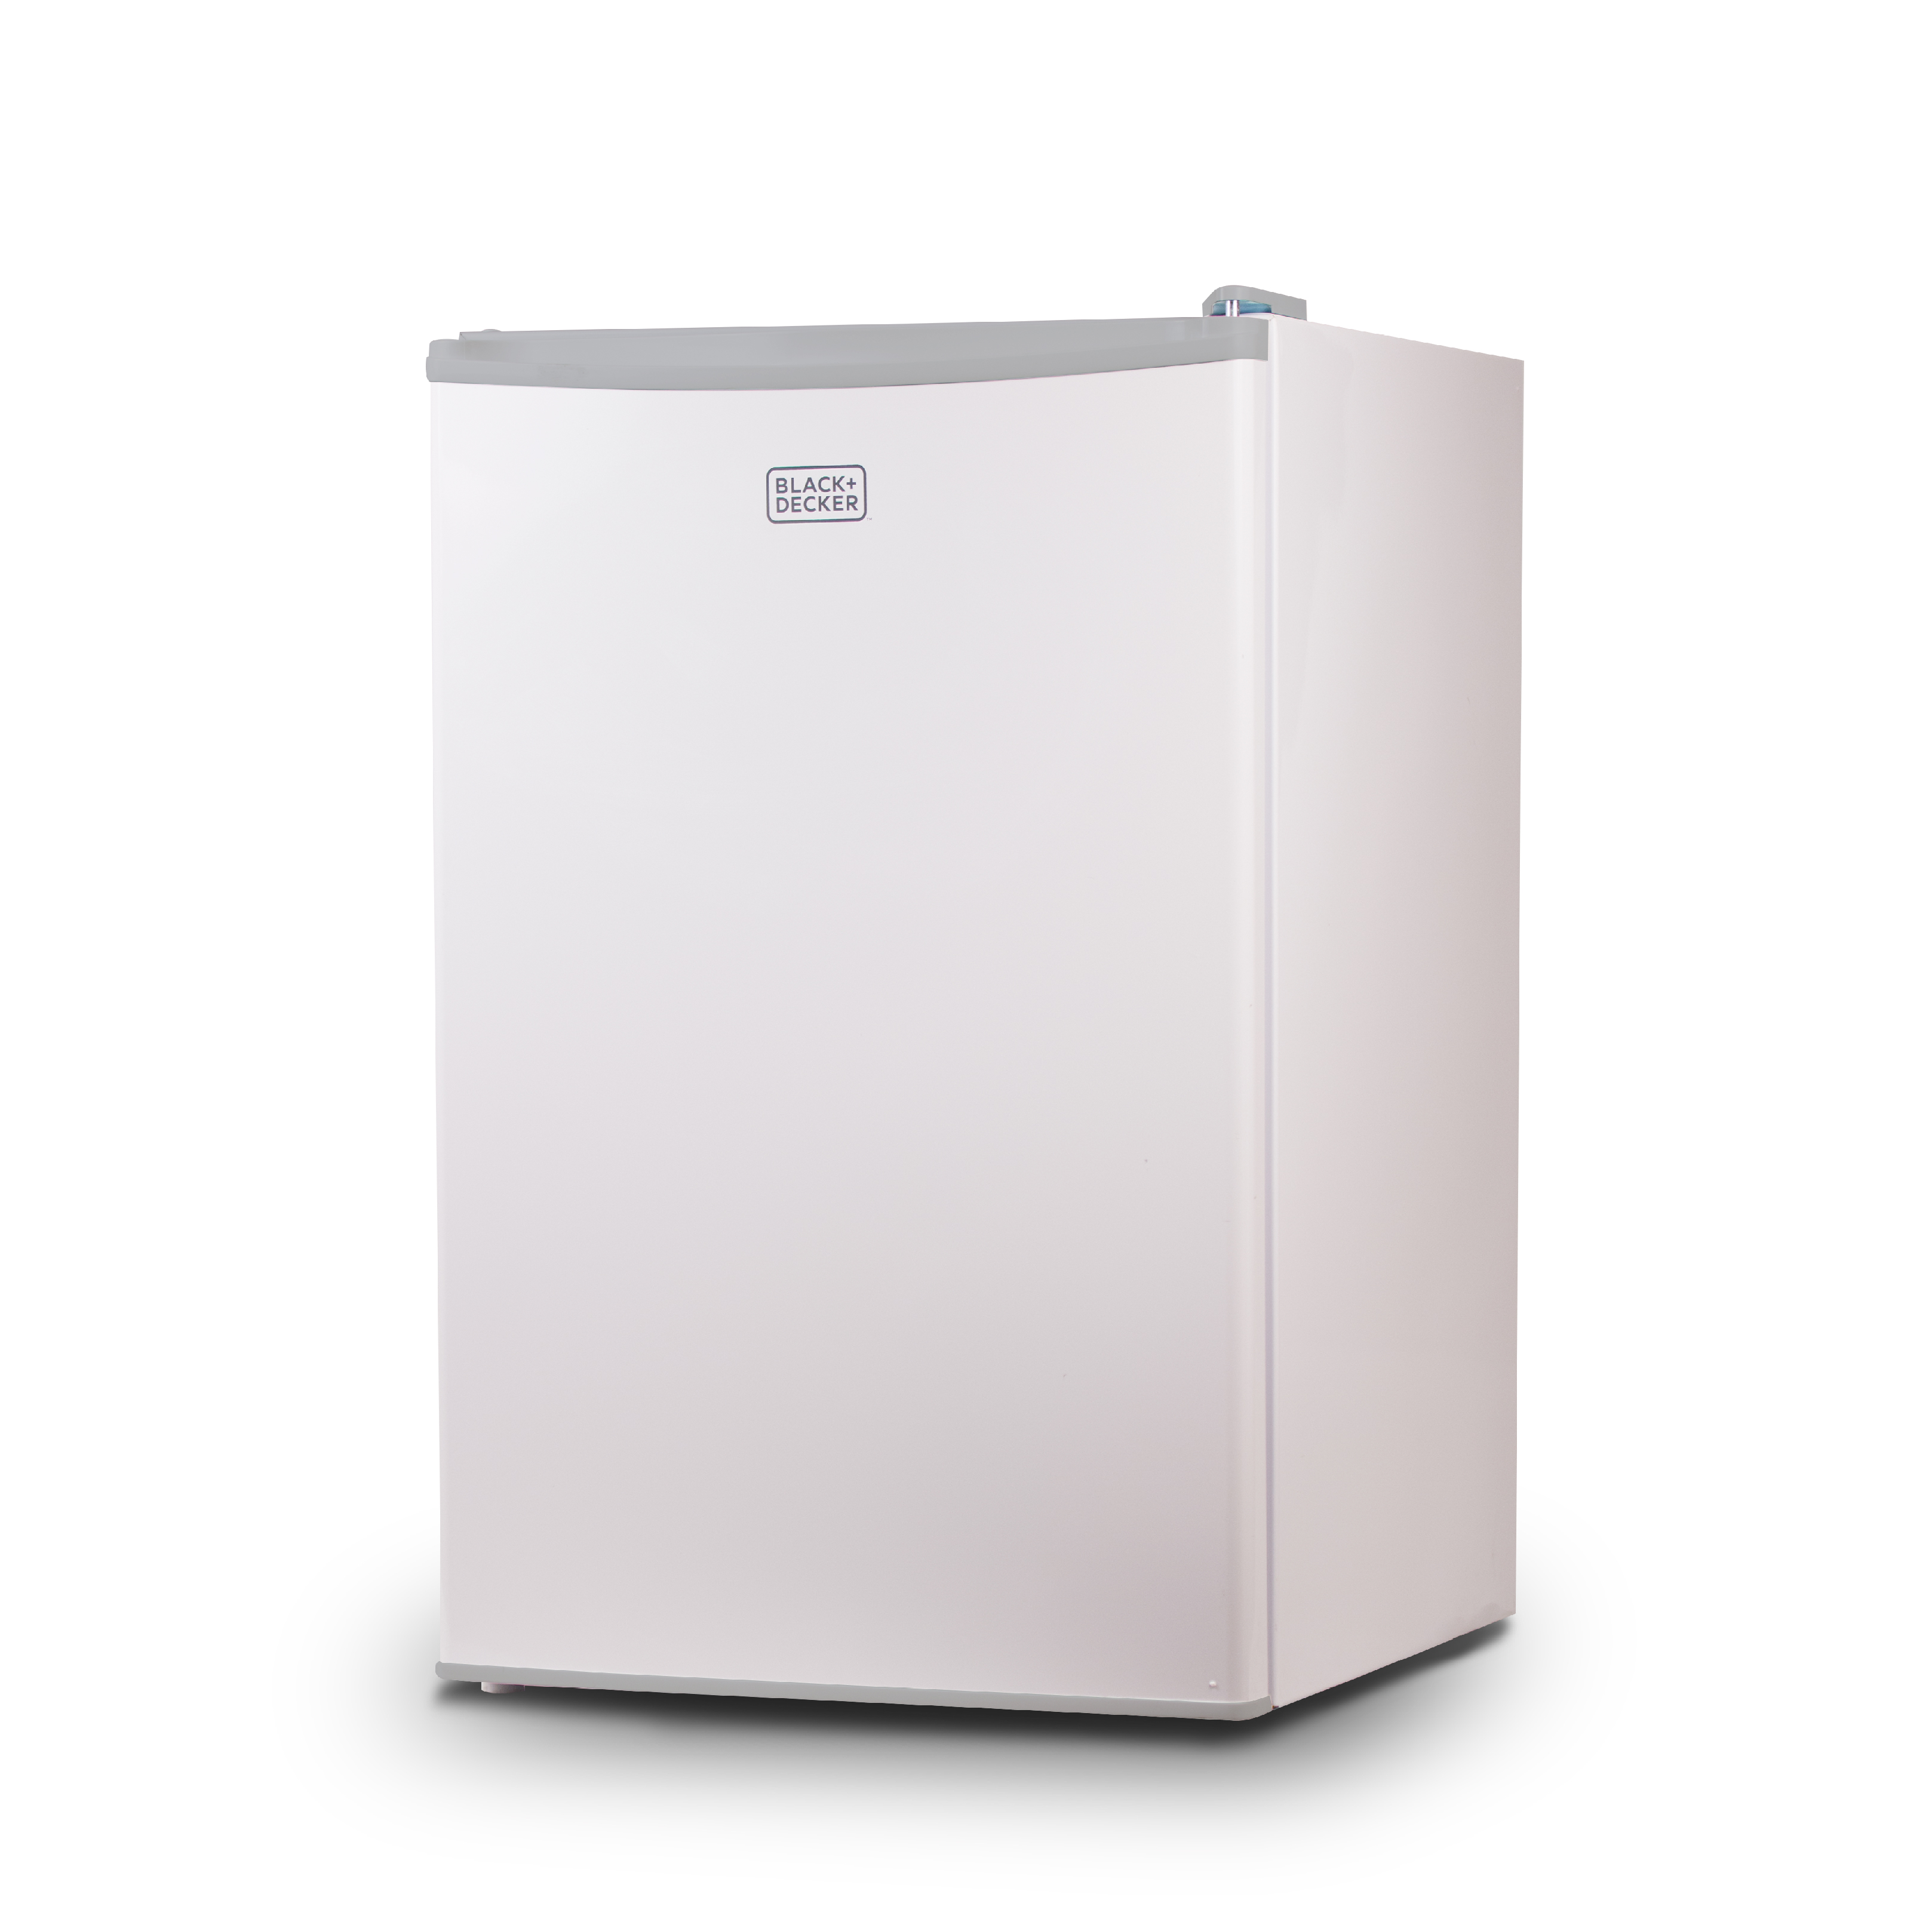 BLACK+DECKER BCRK43W Compact Refrigerator Energy Star Single Door Mini Fridge with Freezer, 4.3 cu. ft., White - image 1 of 7